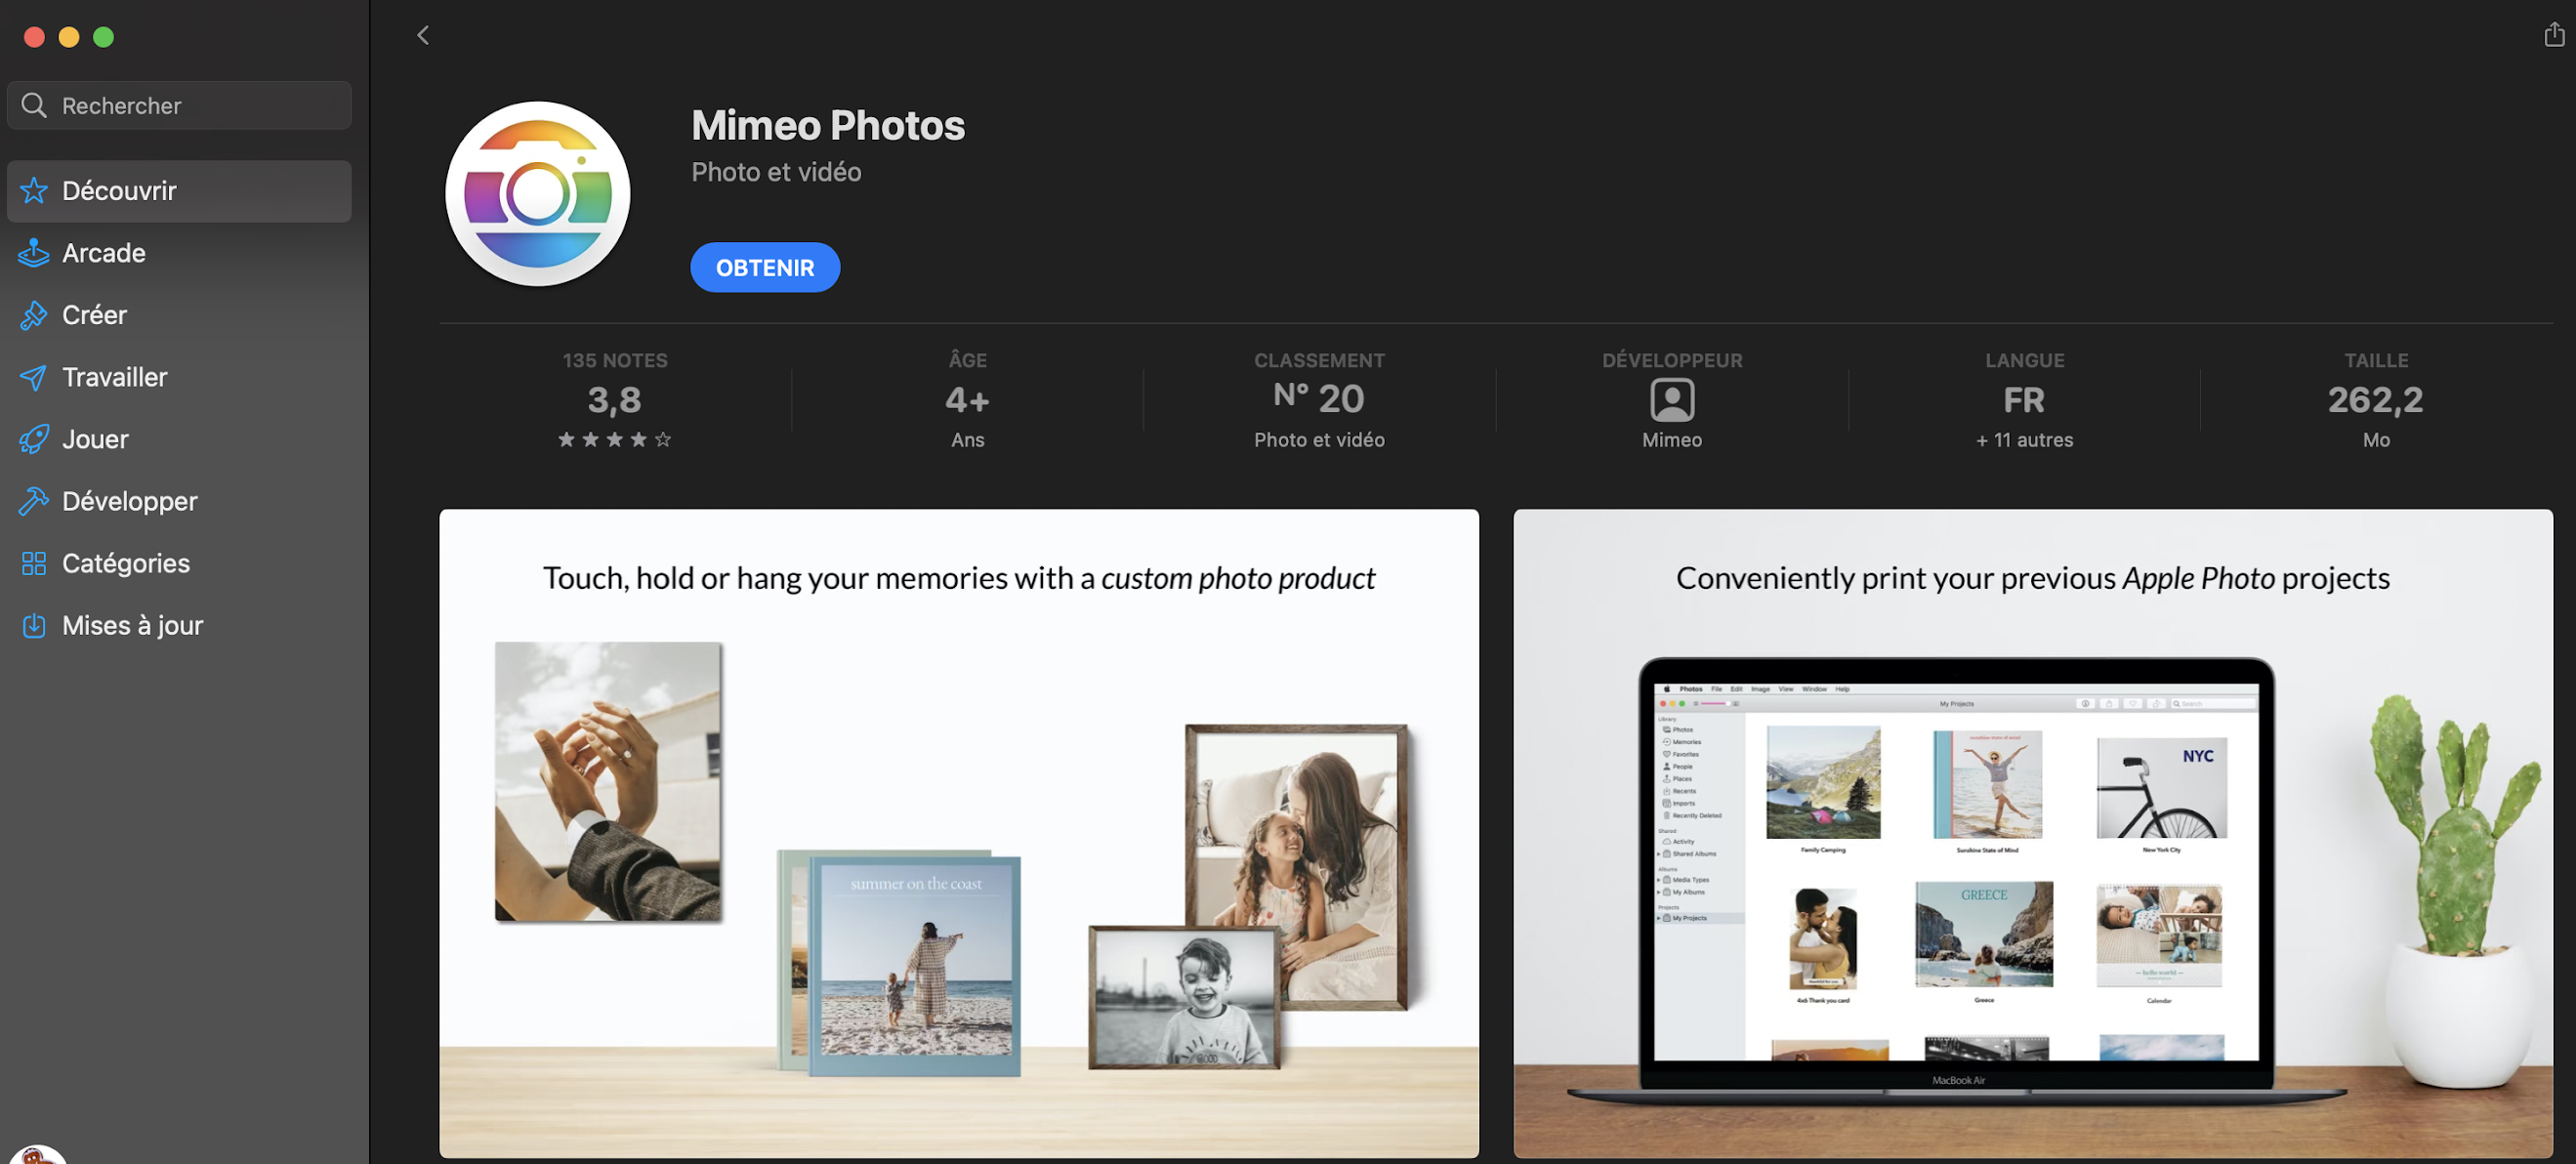 Mimeo Photos on the App Store